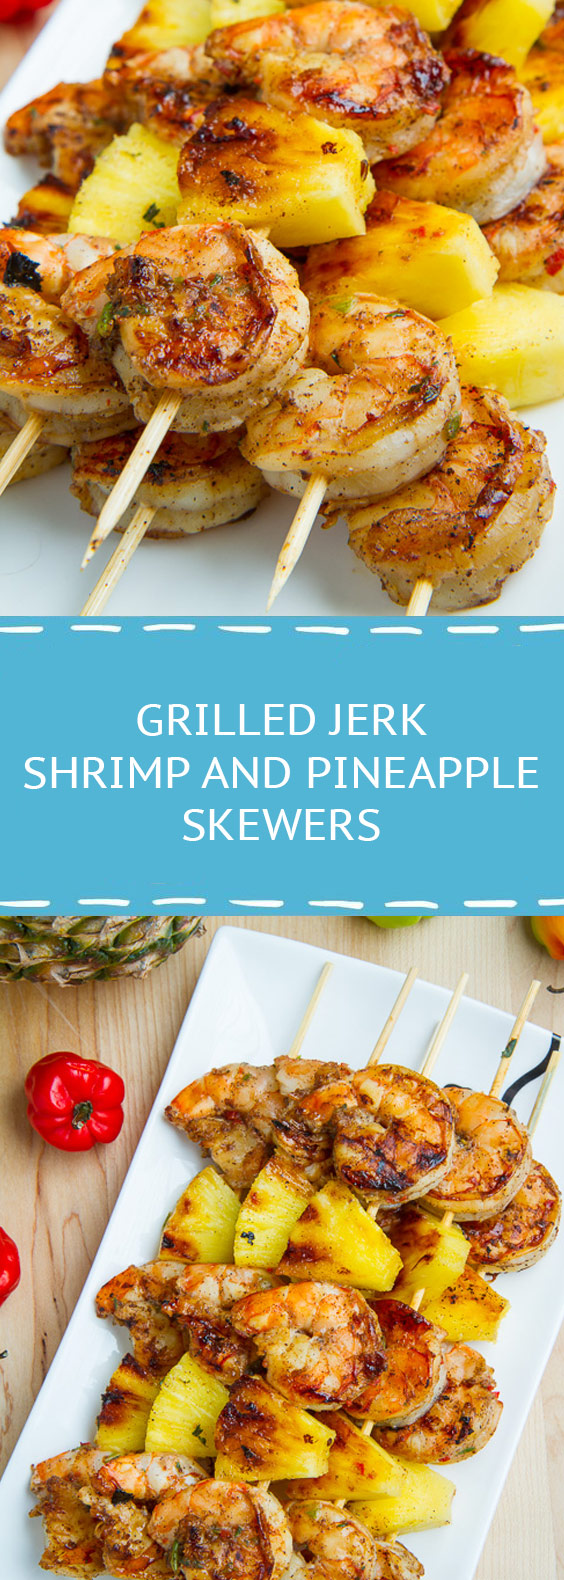 Grilled Jerk Shrimp and Pineapple Skewers